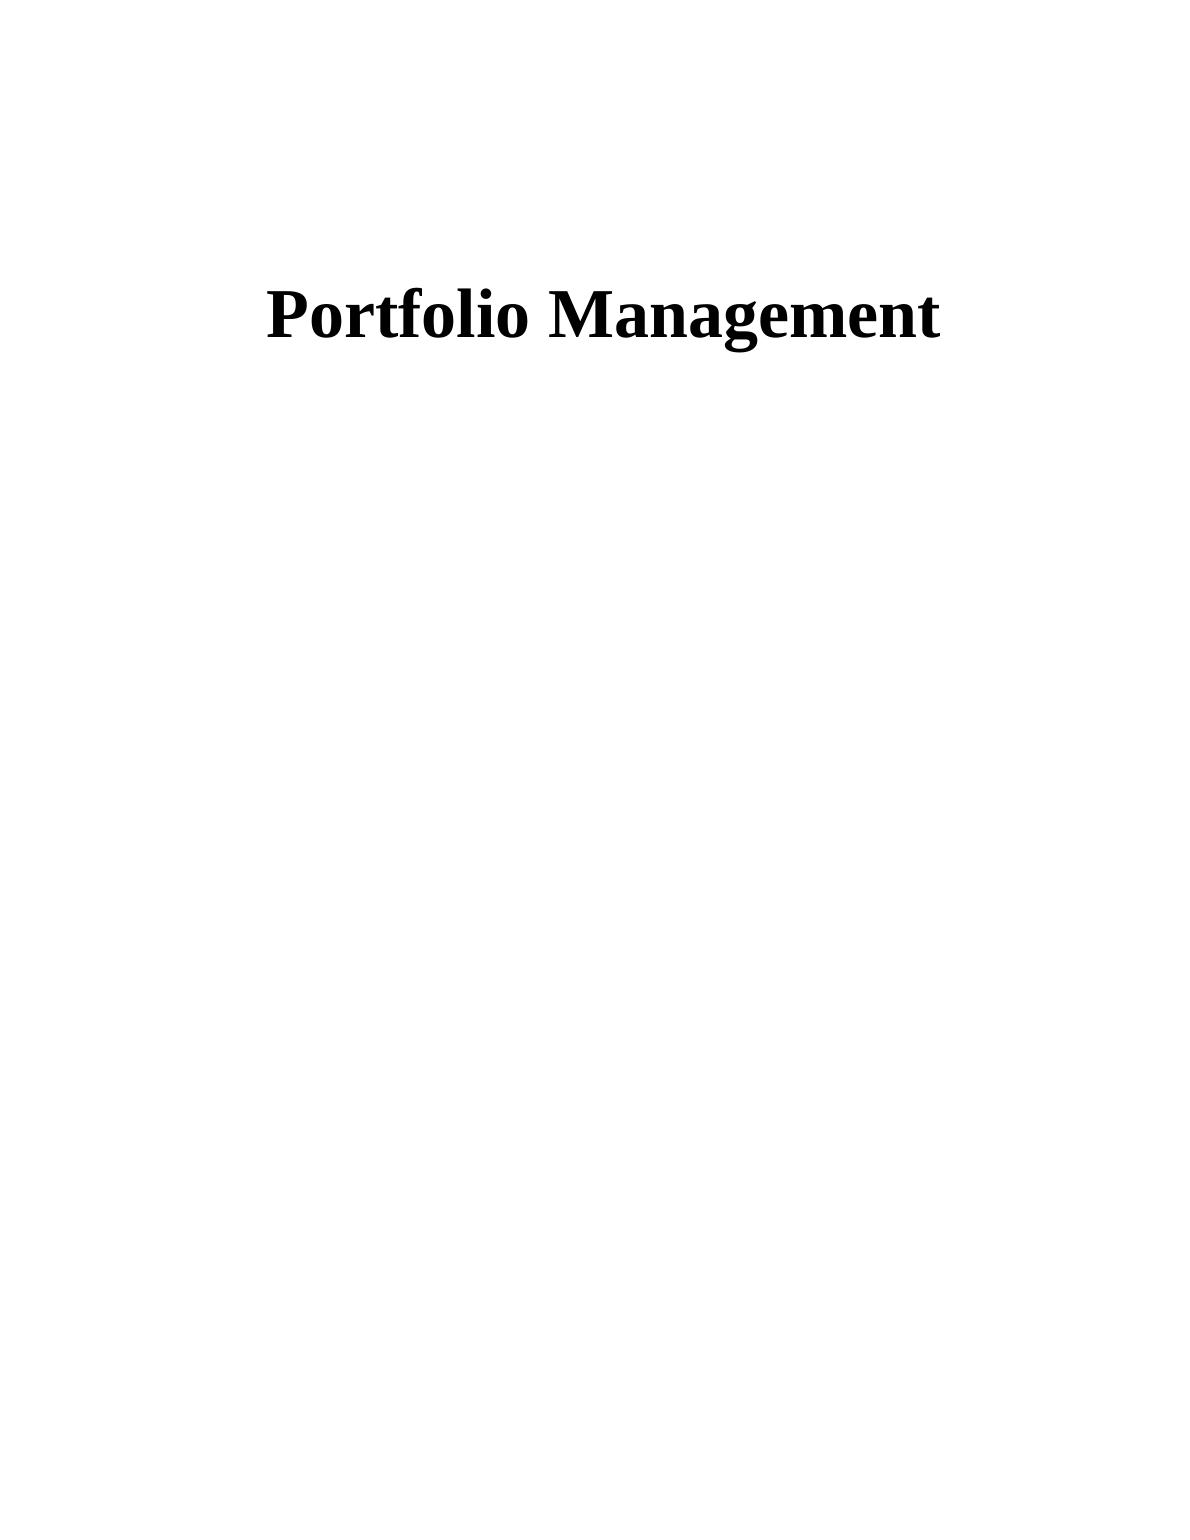 Report on Importance of Portfolio Management_1